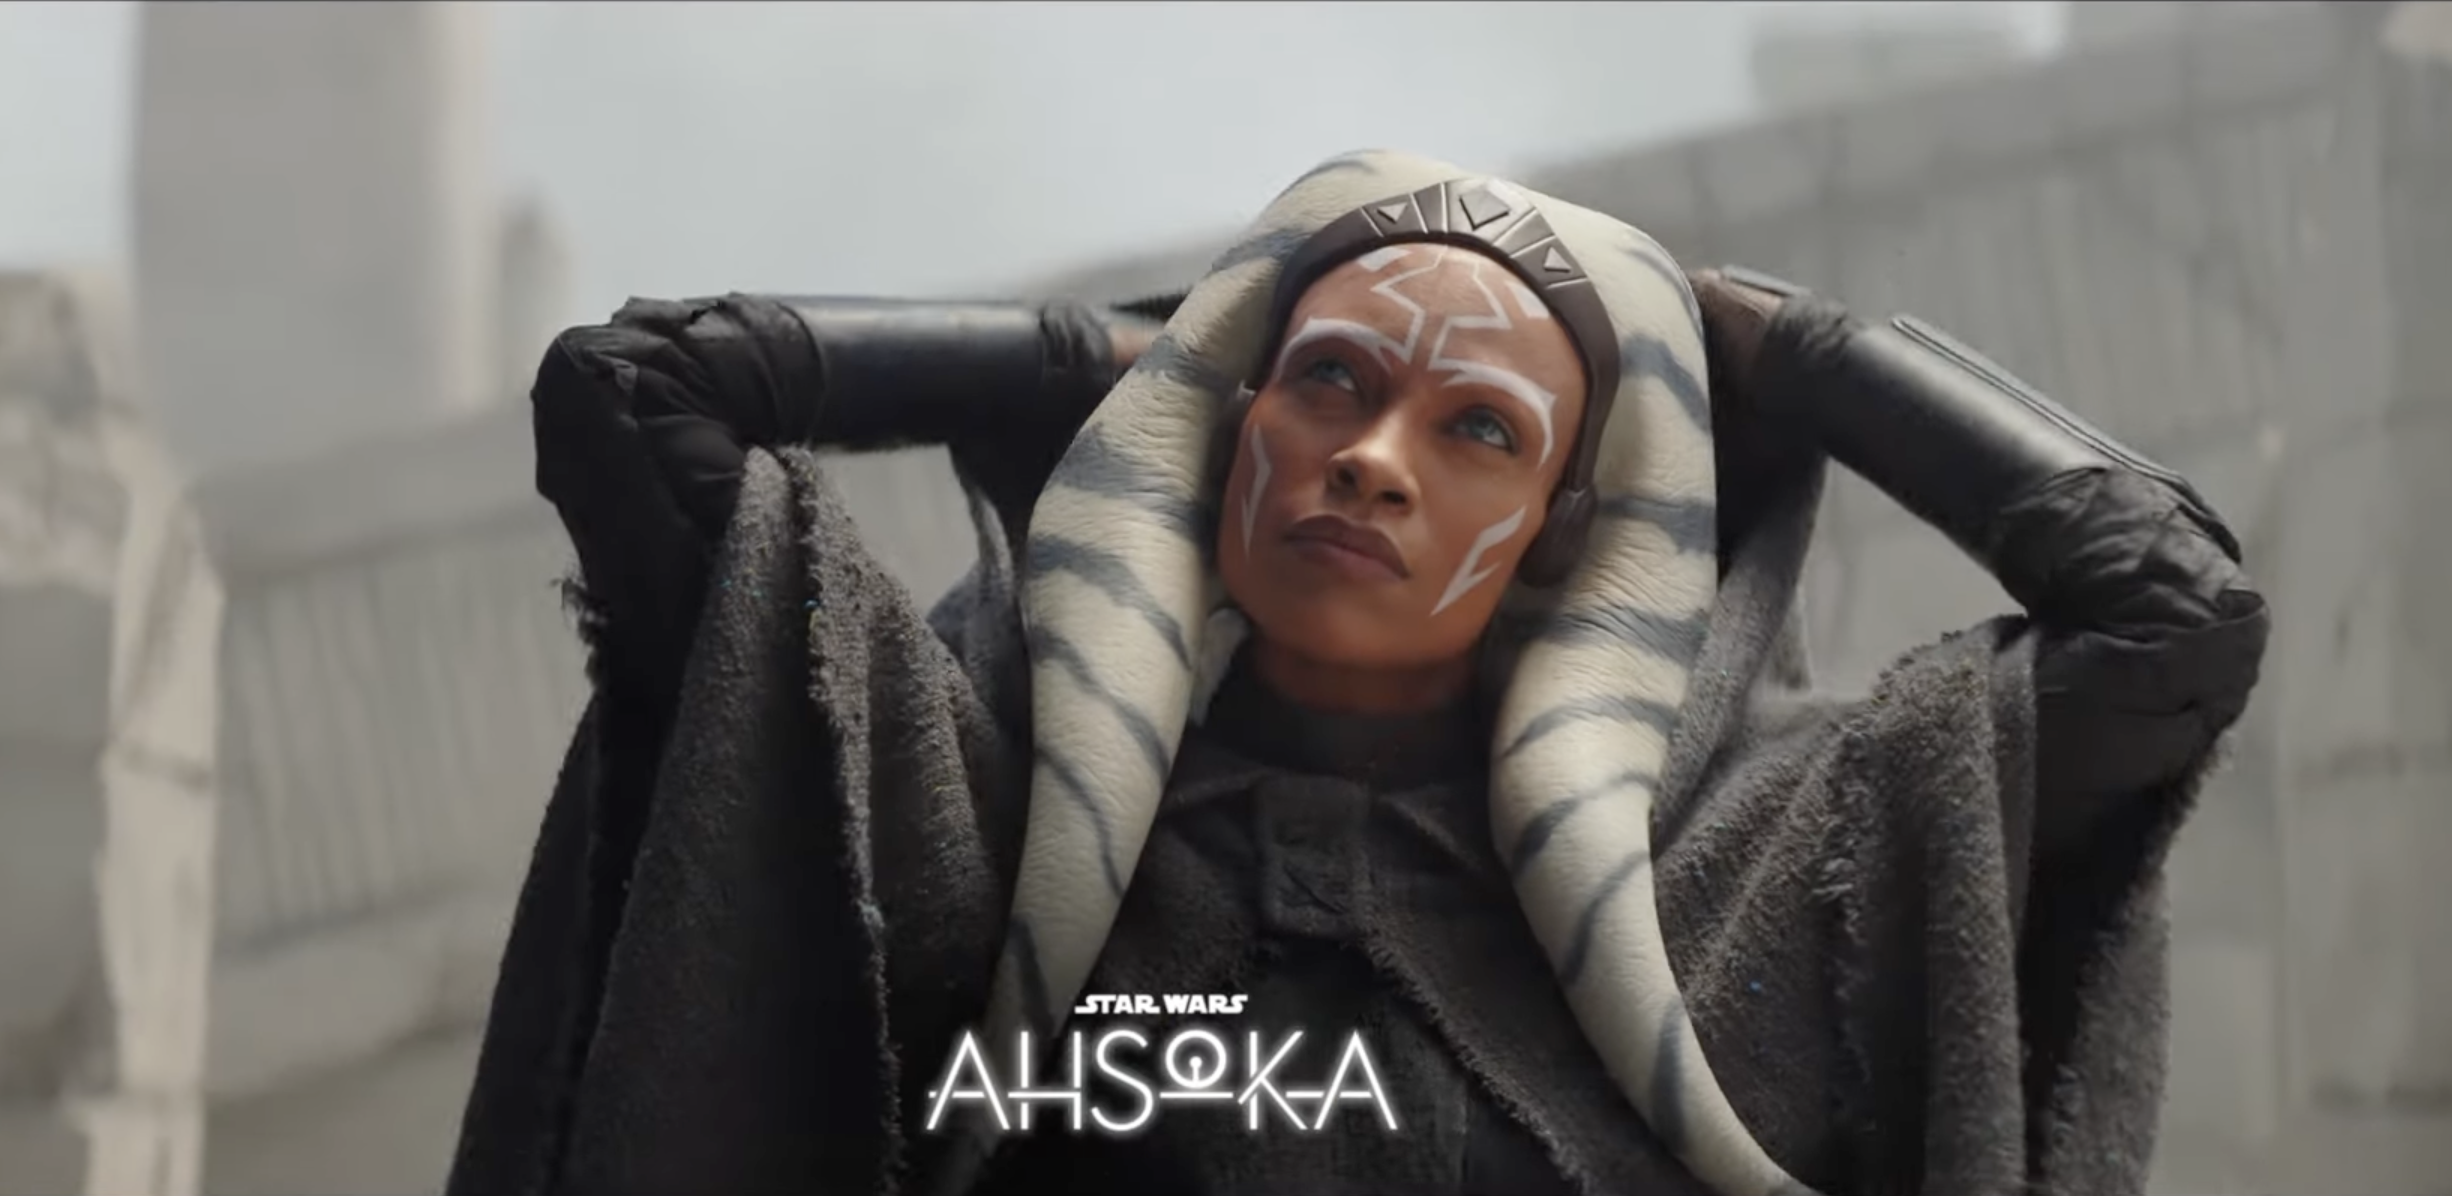 Star Wars Ahsoka on Disney Plus